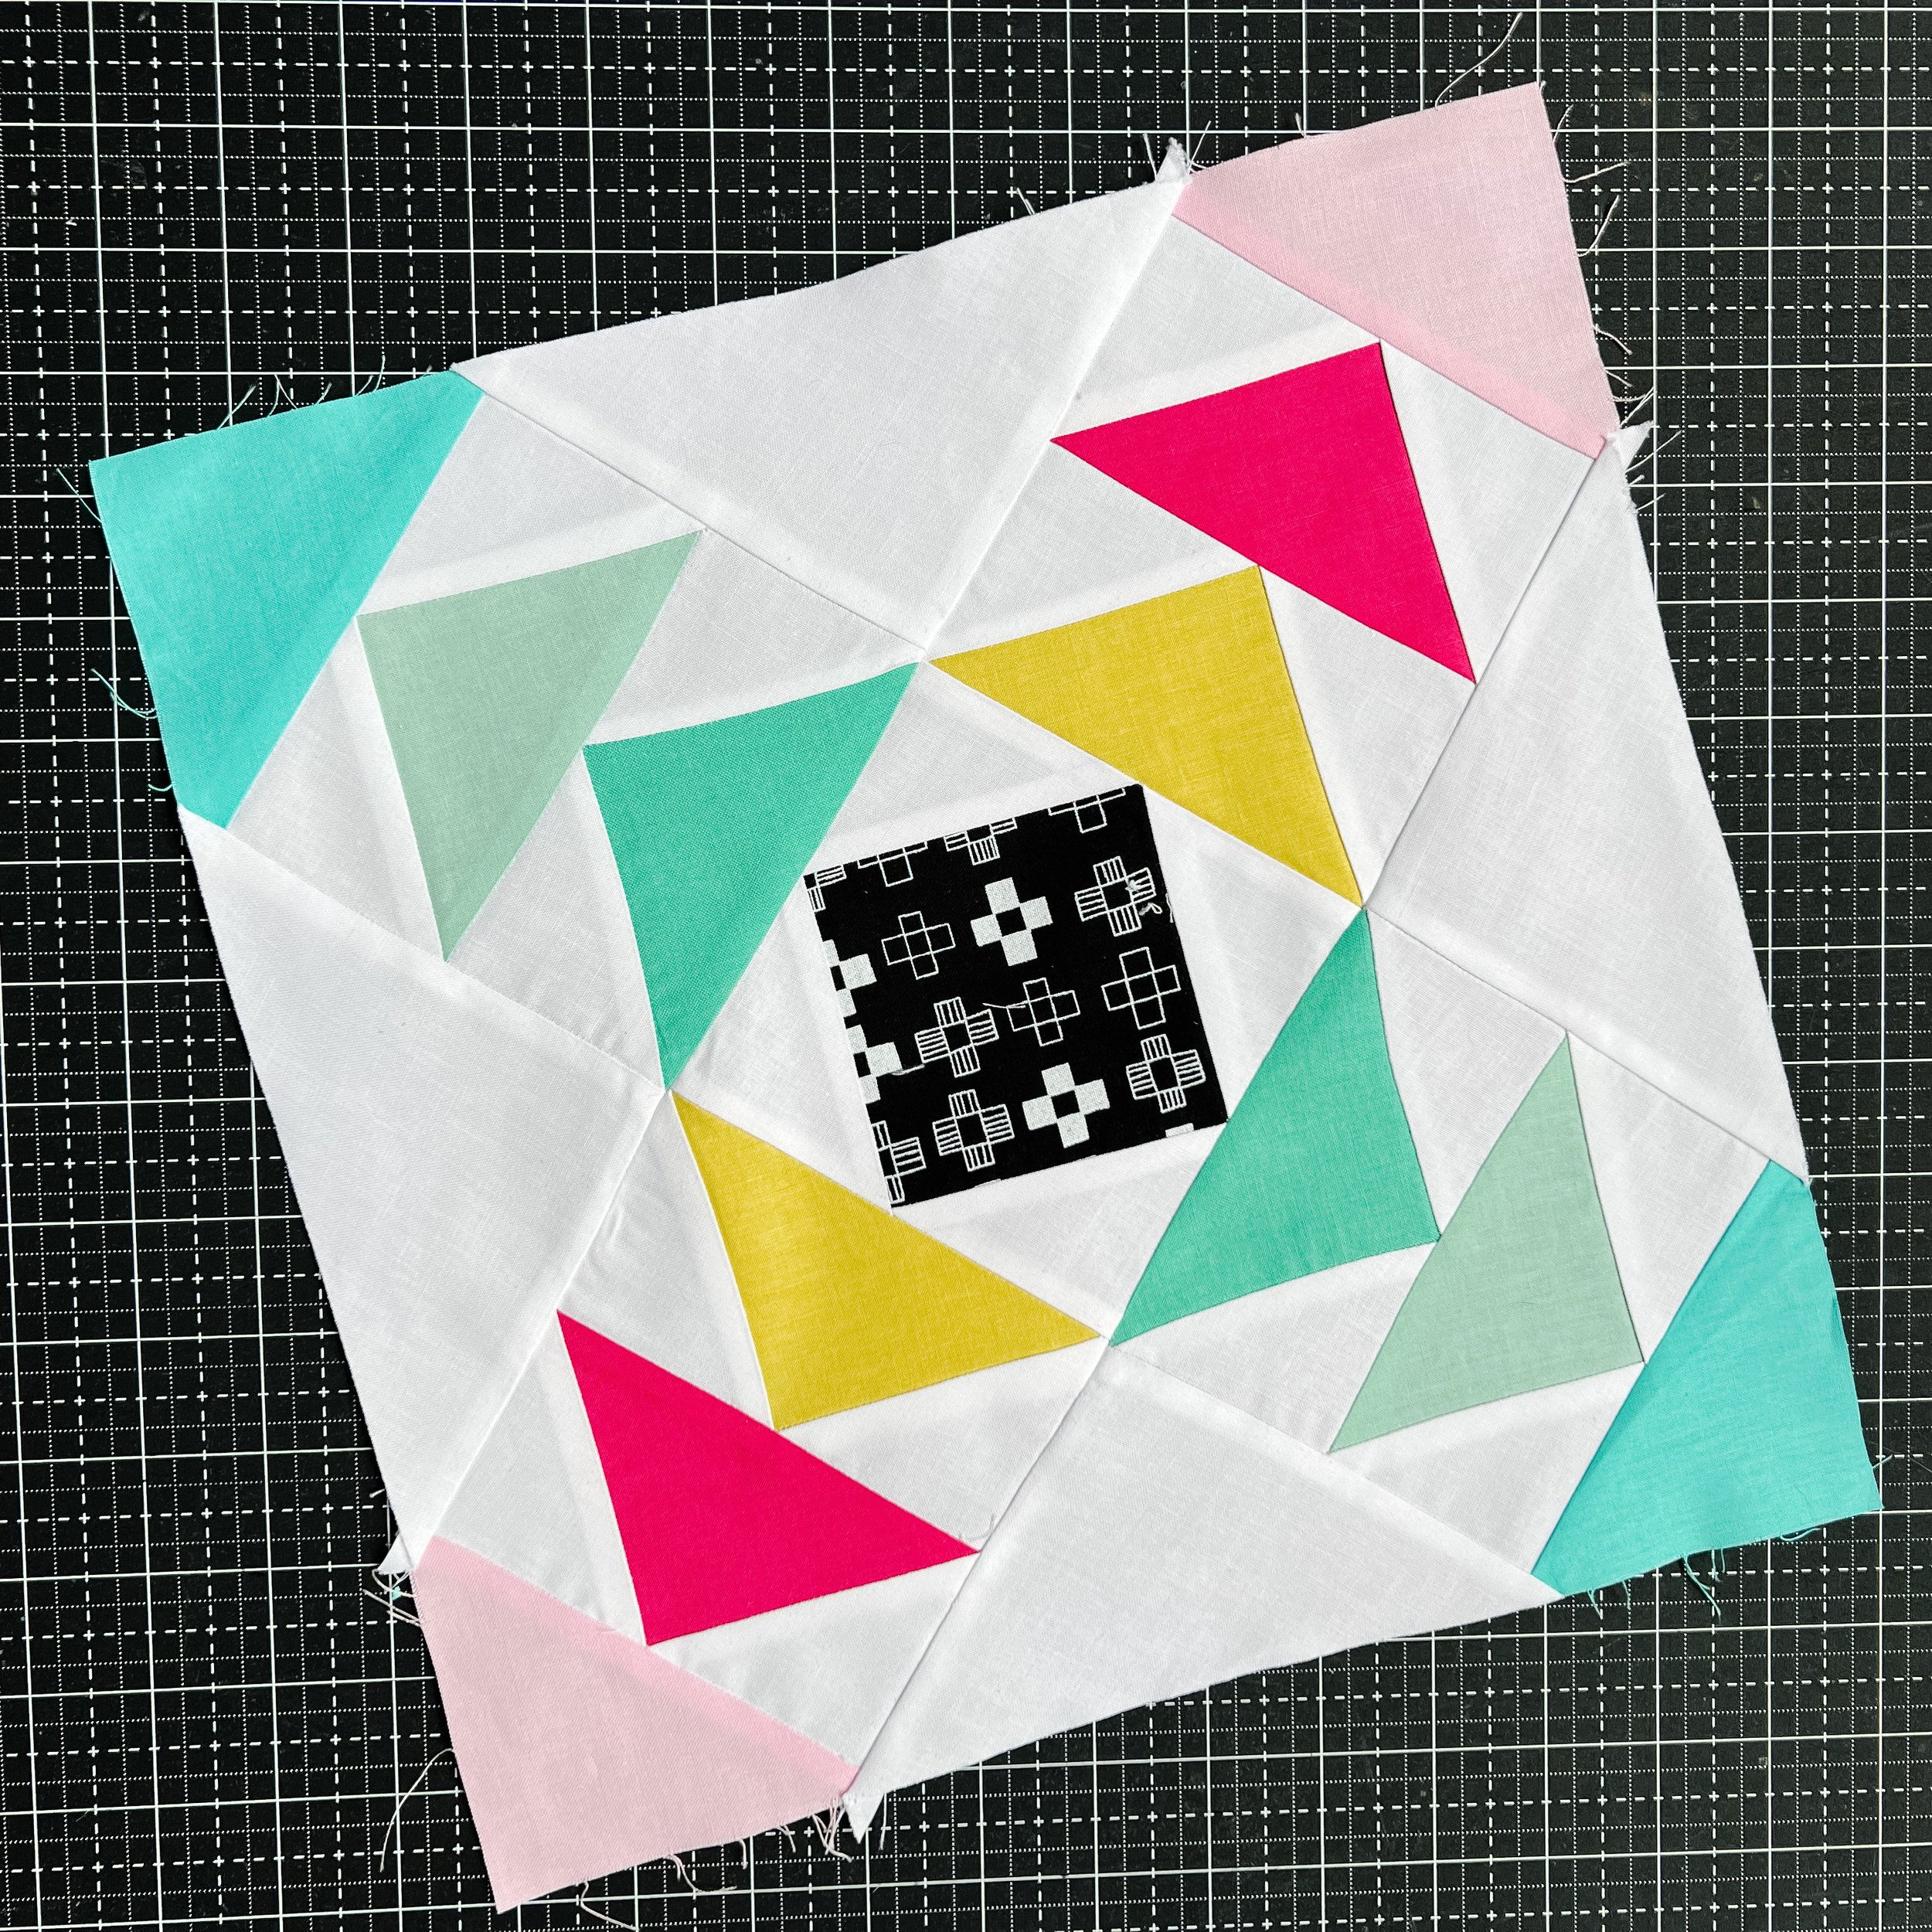 7-27-16 Paper piecing on block 22 of #TheSplendidSampler quilt along.  #RelaxAndCraft 